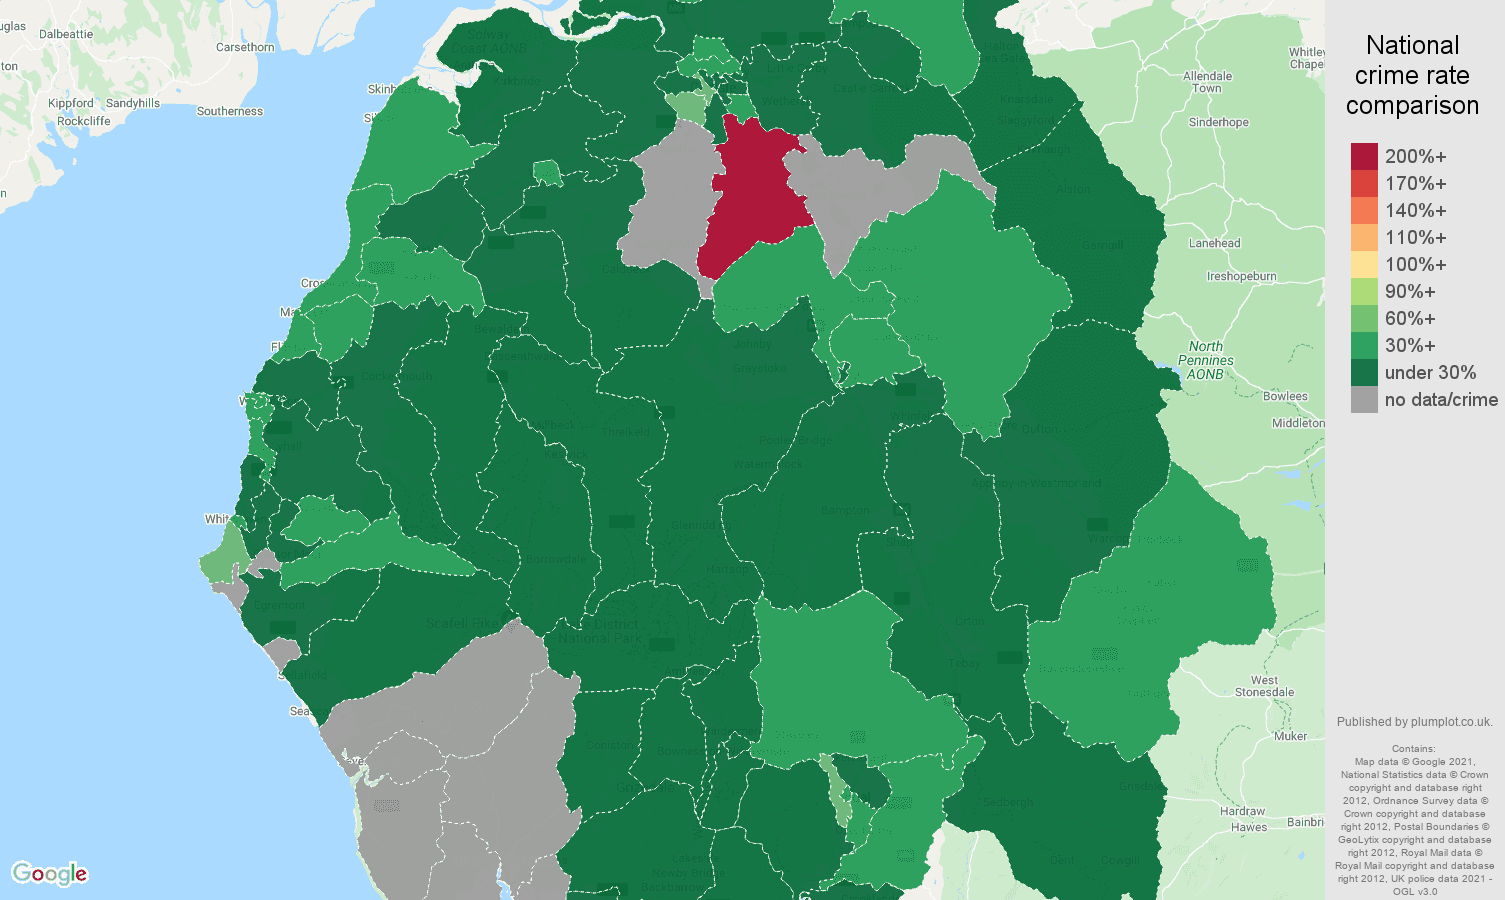 Cumbria vehicle crime rate comparison map